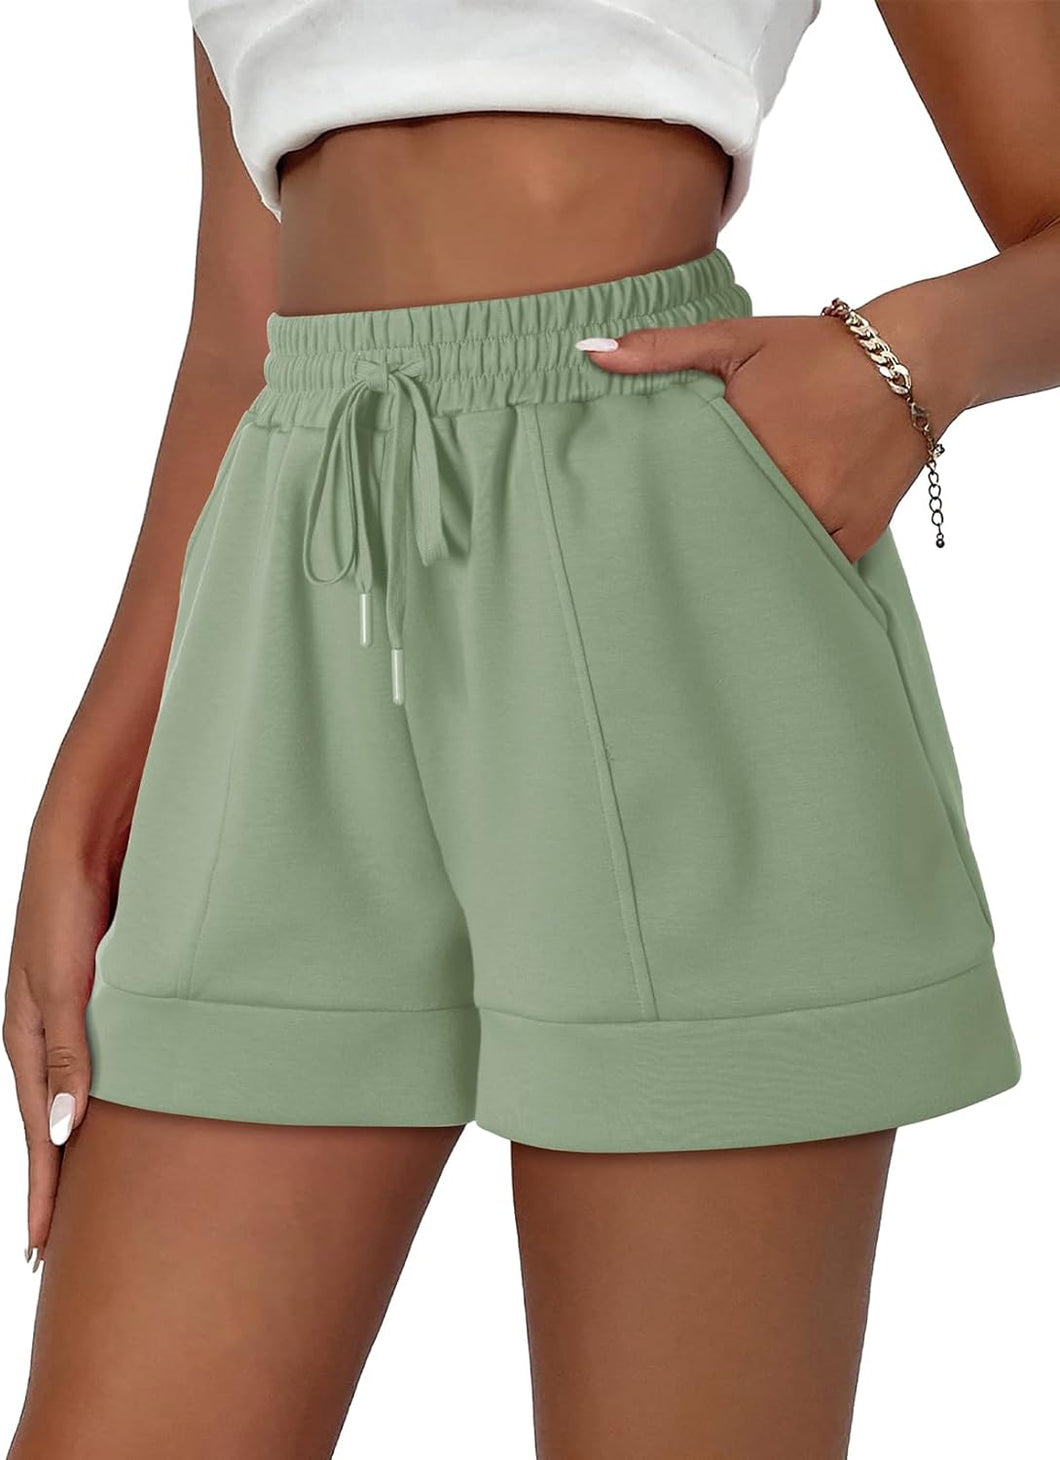 Comfort Casual Sage Green Drawstring Shorts w/Pockets-Plus Size Dream Girl